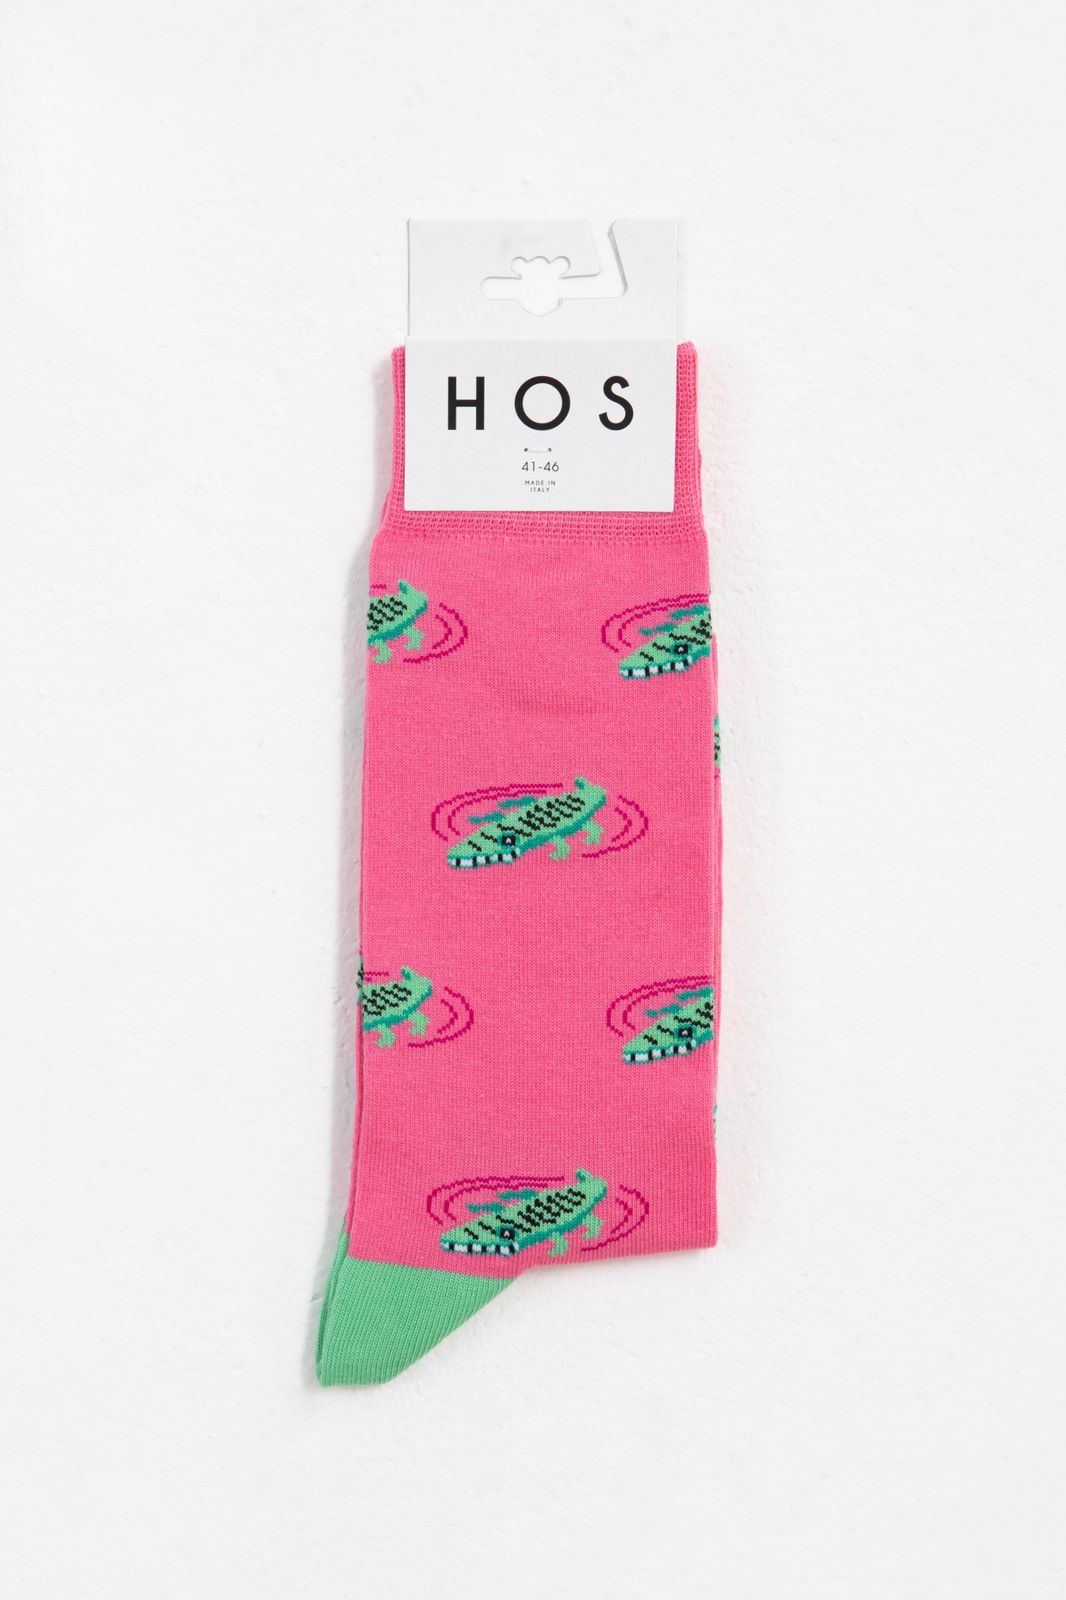 Heroes on Socks Socken mit Krokodil - rosa